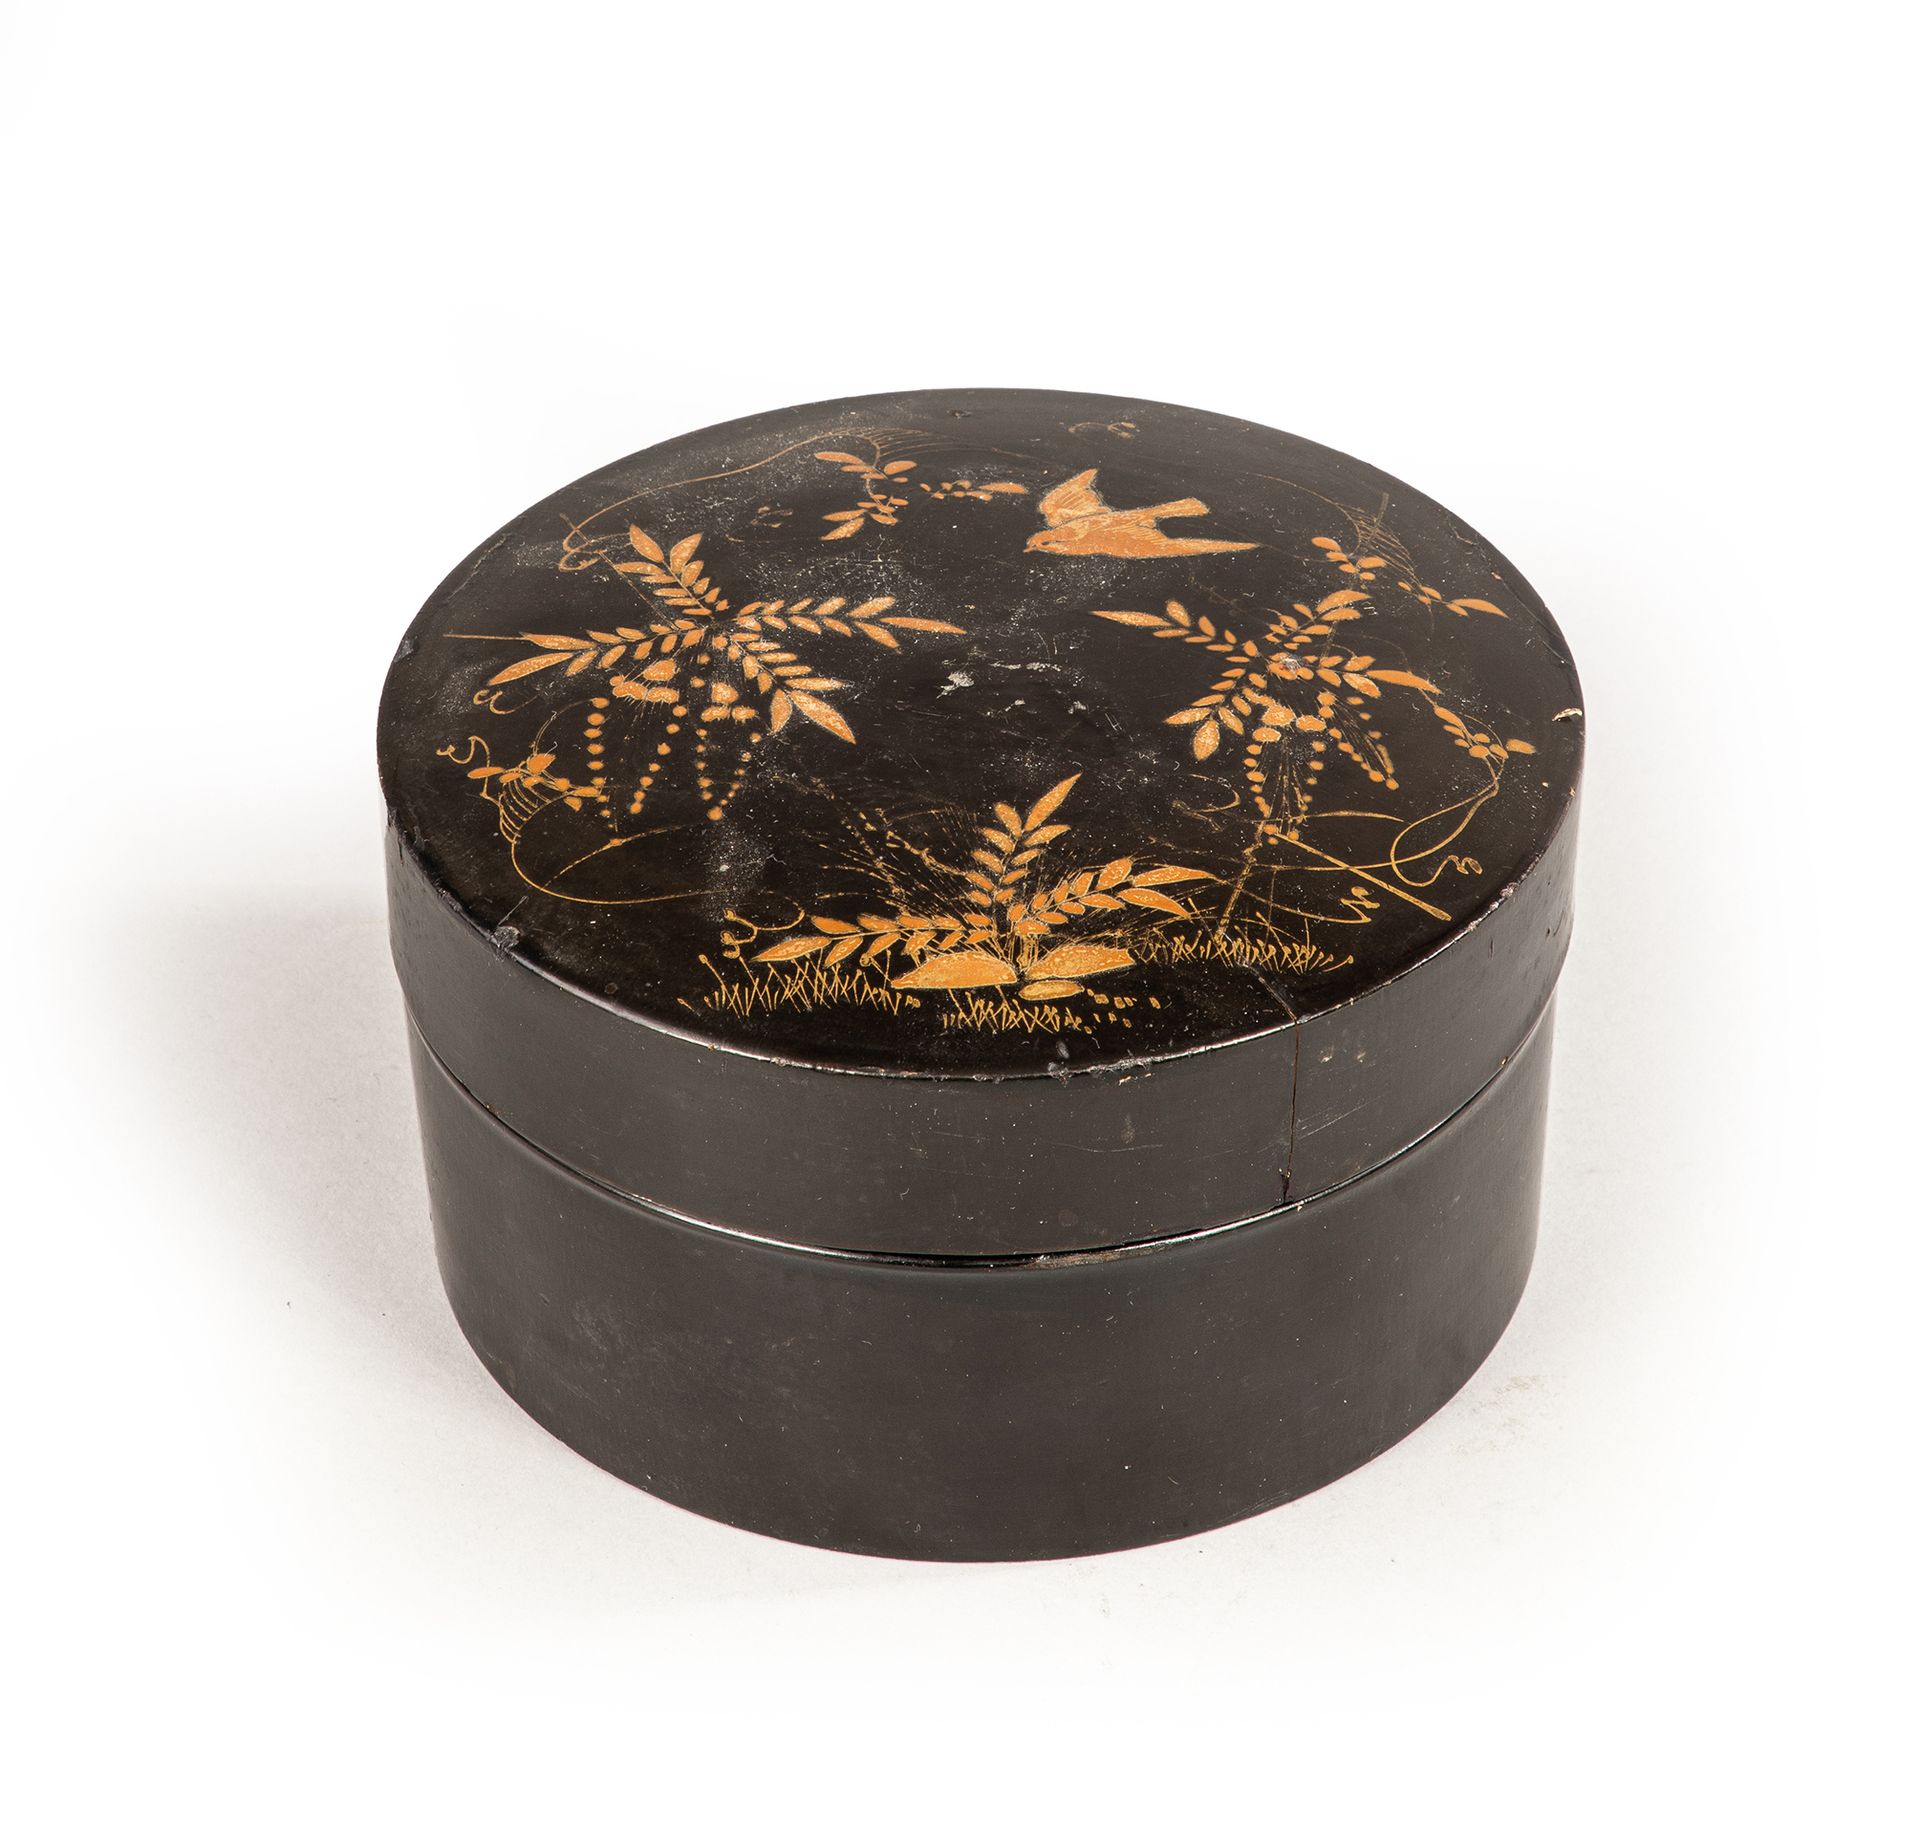 Null 
黑色漆面木质圆形寿司盒，带金色装饰。

日本 20世纪

直径38厘米